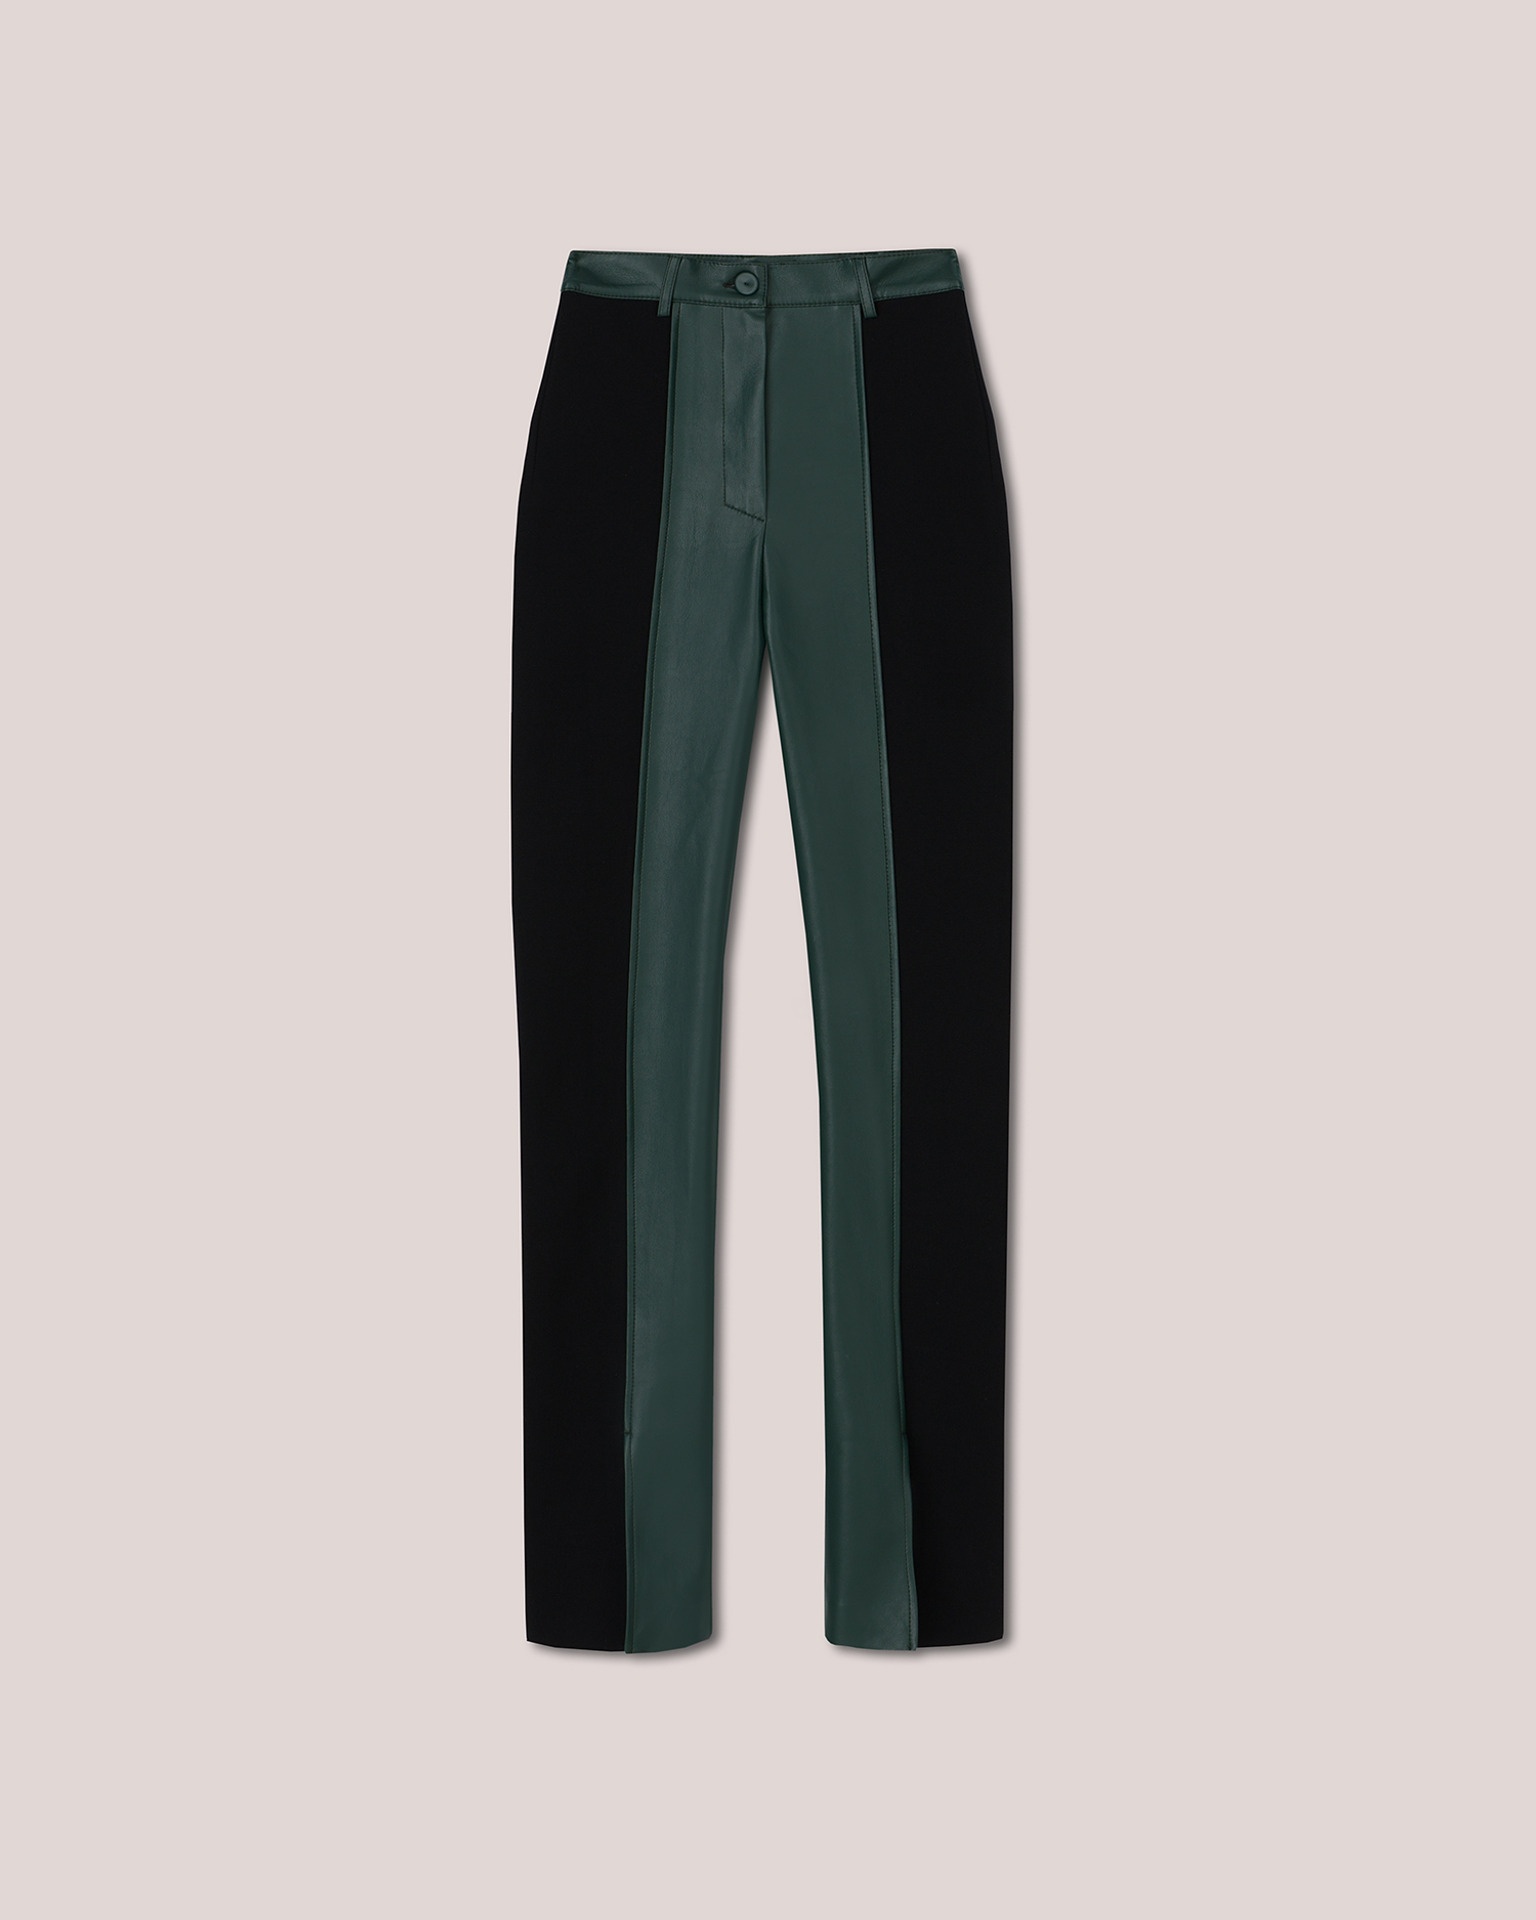 FILO - Contrast trouser - Pine green/black - 5